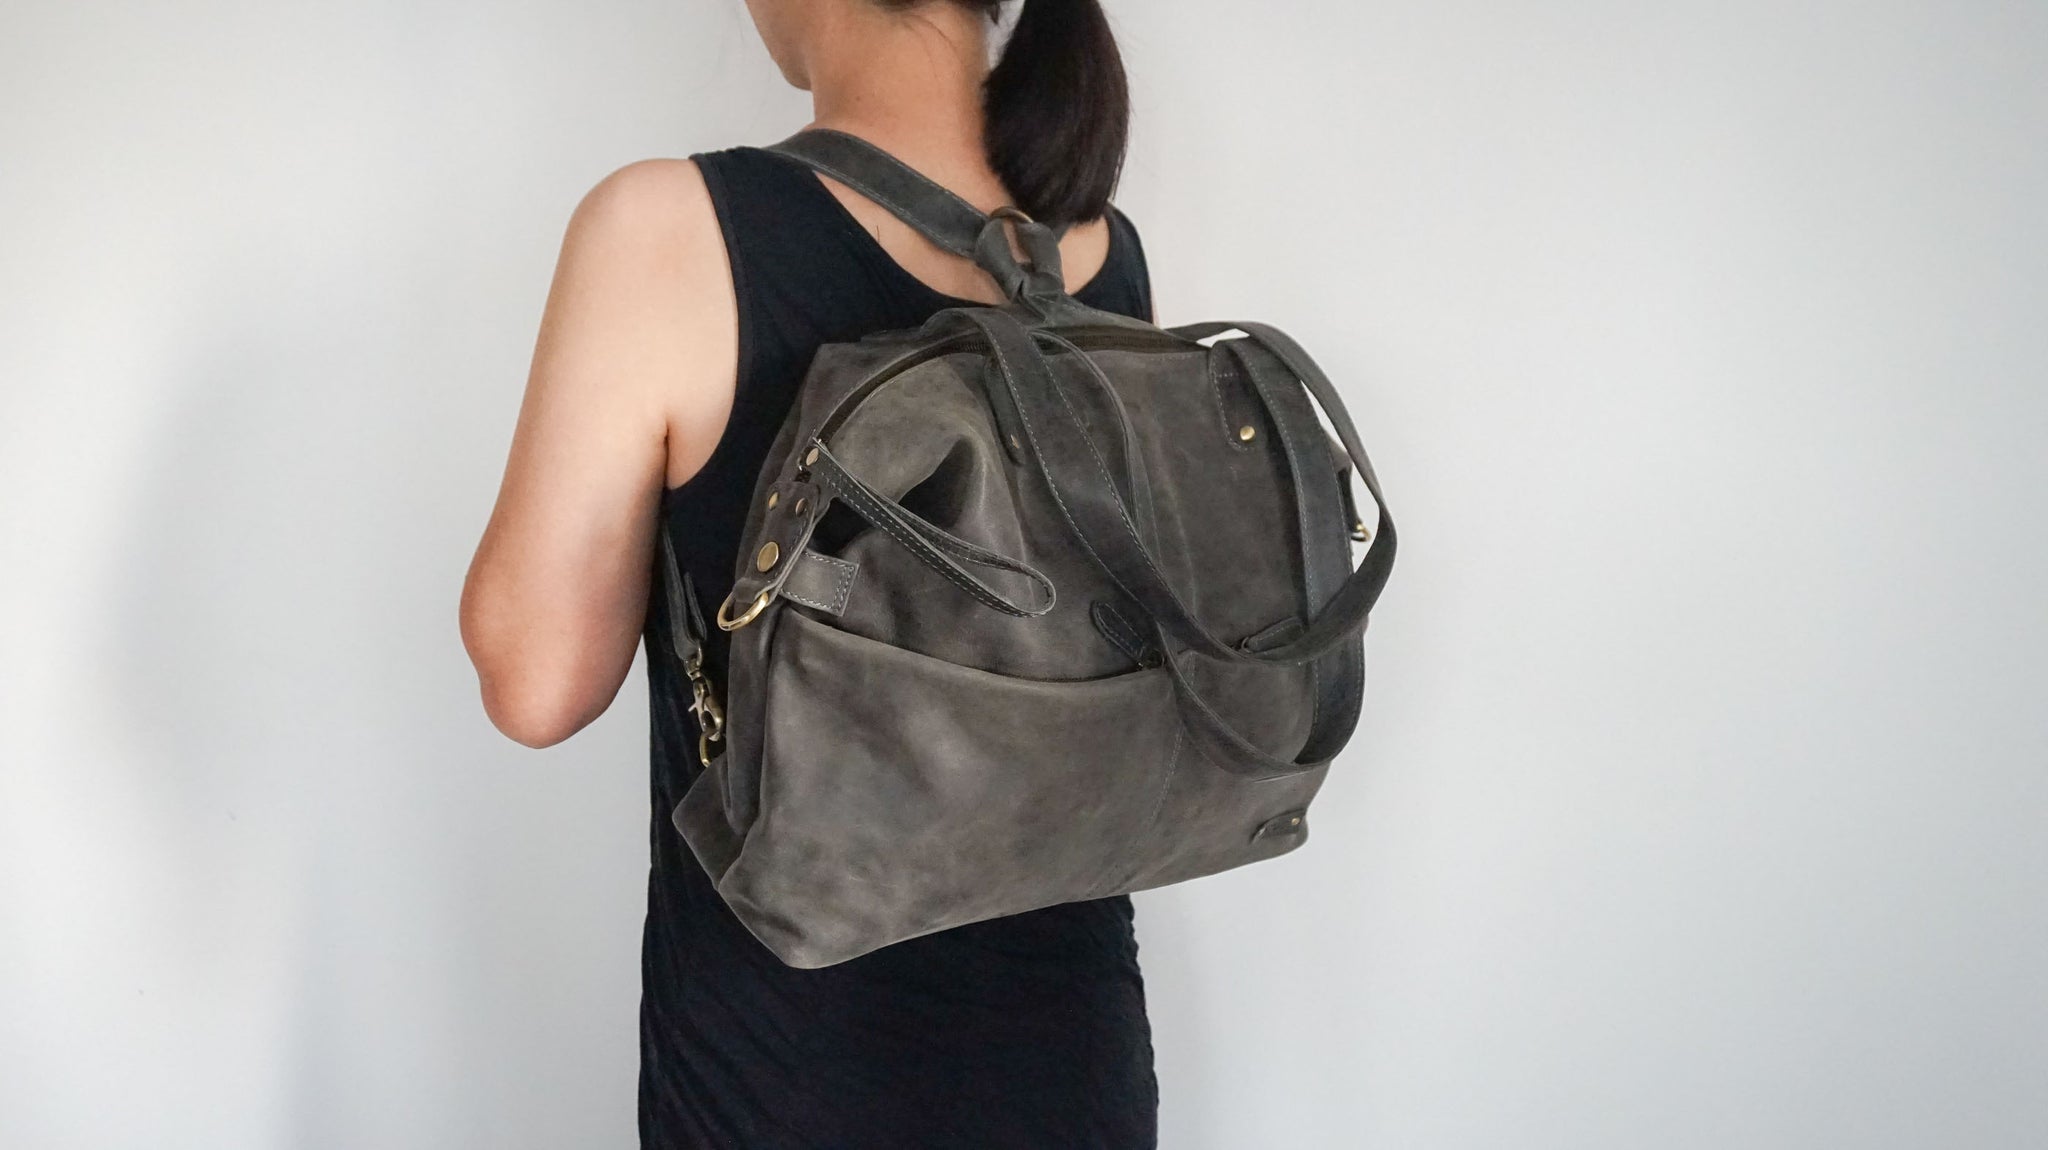 Cambridge Satchel Company Bag Review | POPSUGAR Fashion